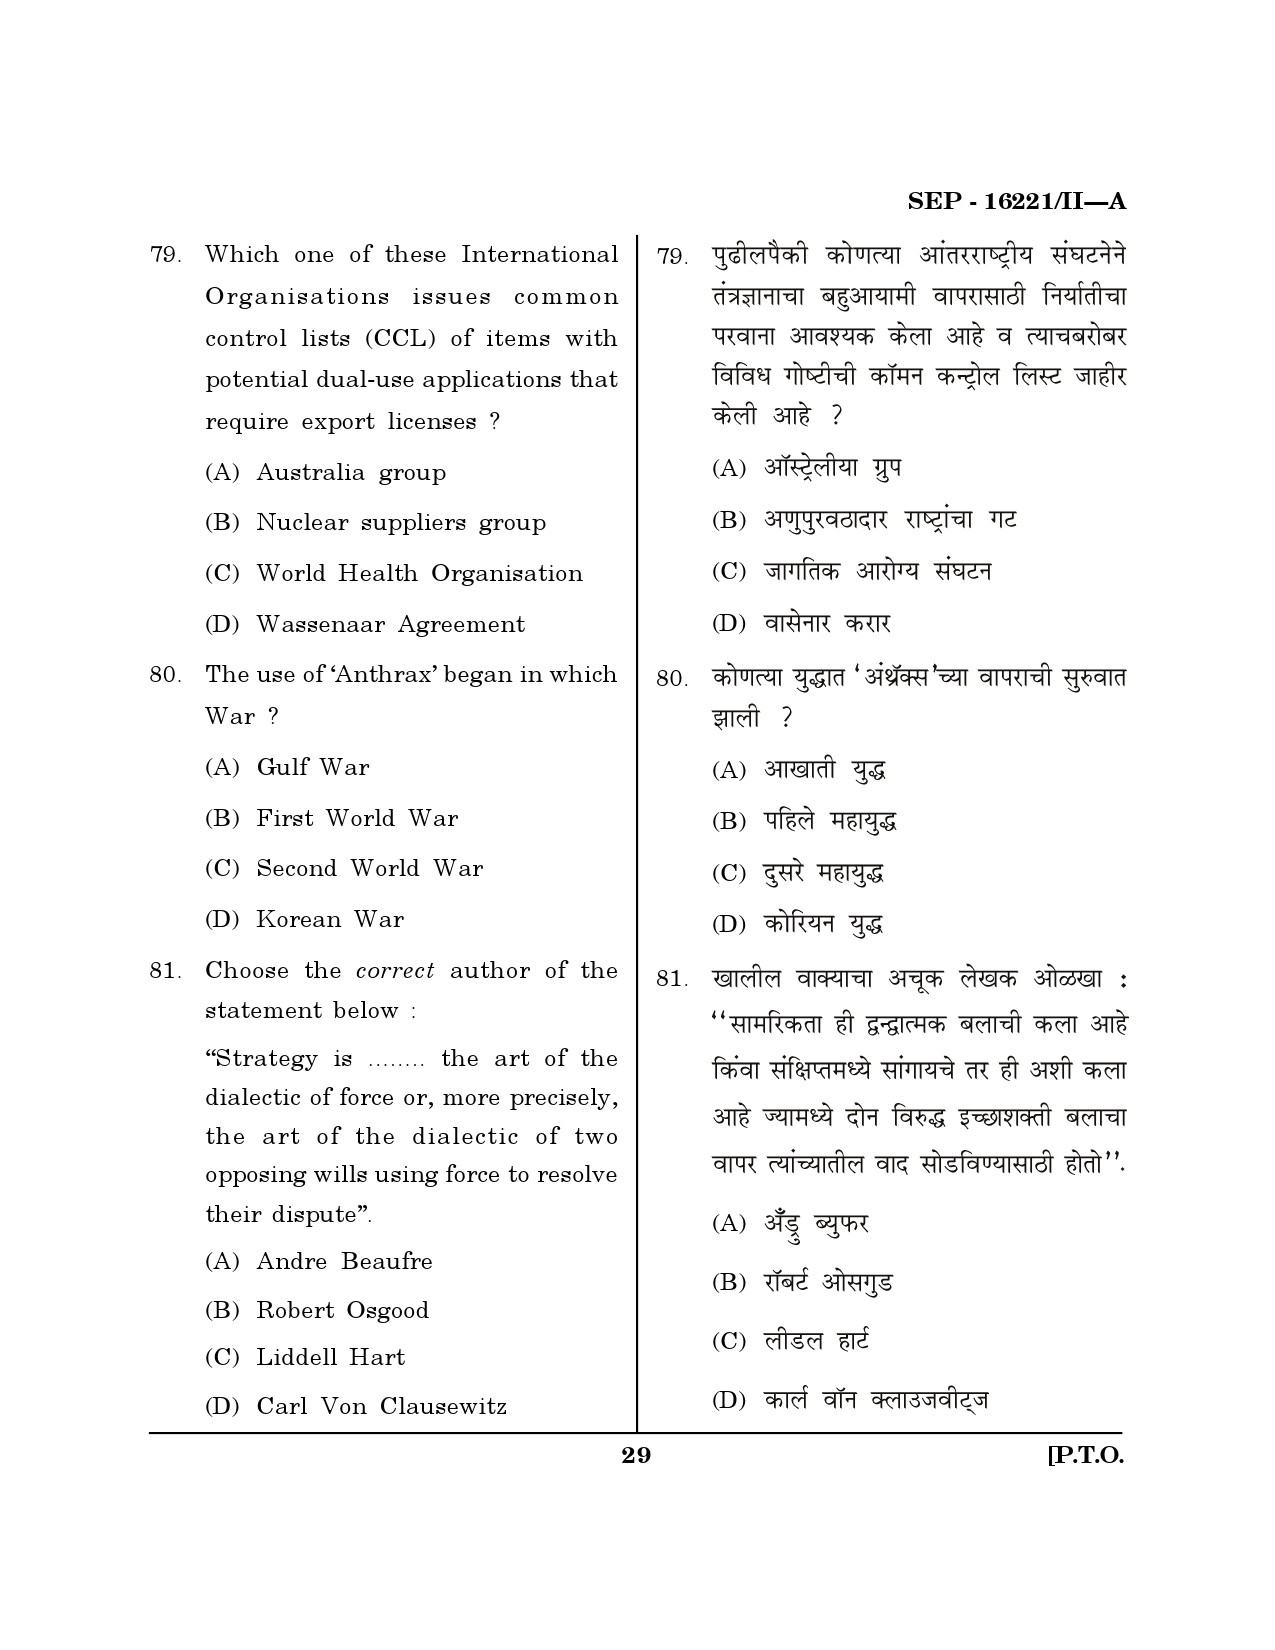 Maharashtra SET Defence and Strategic Studies Exam Question Paper September 2021 28